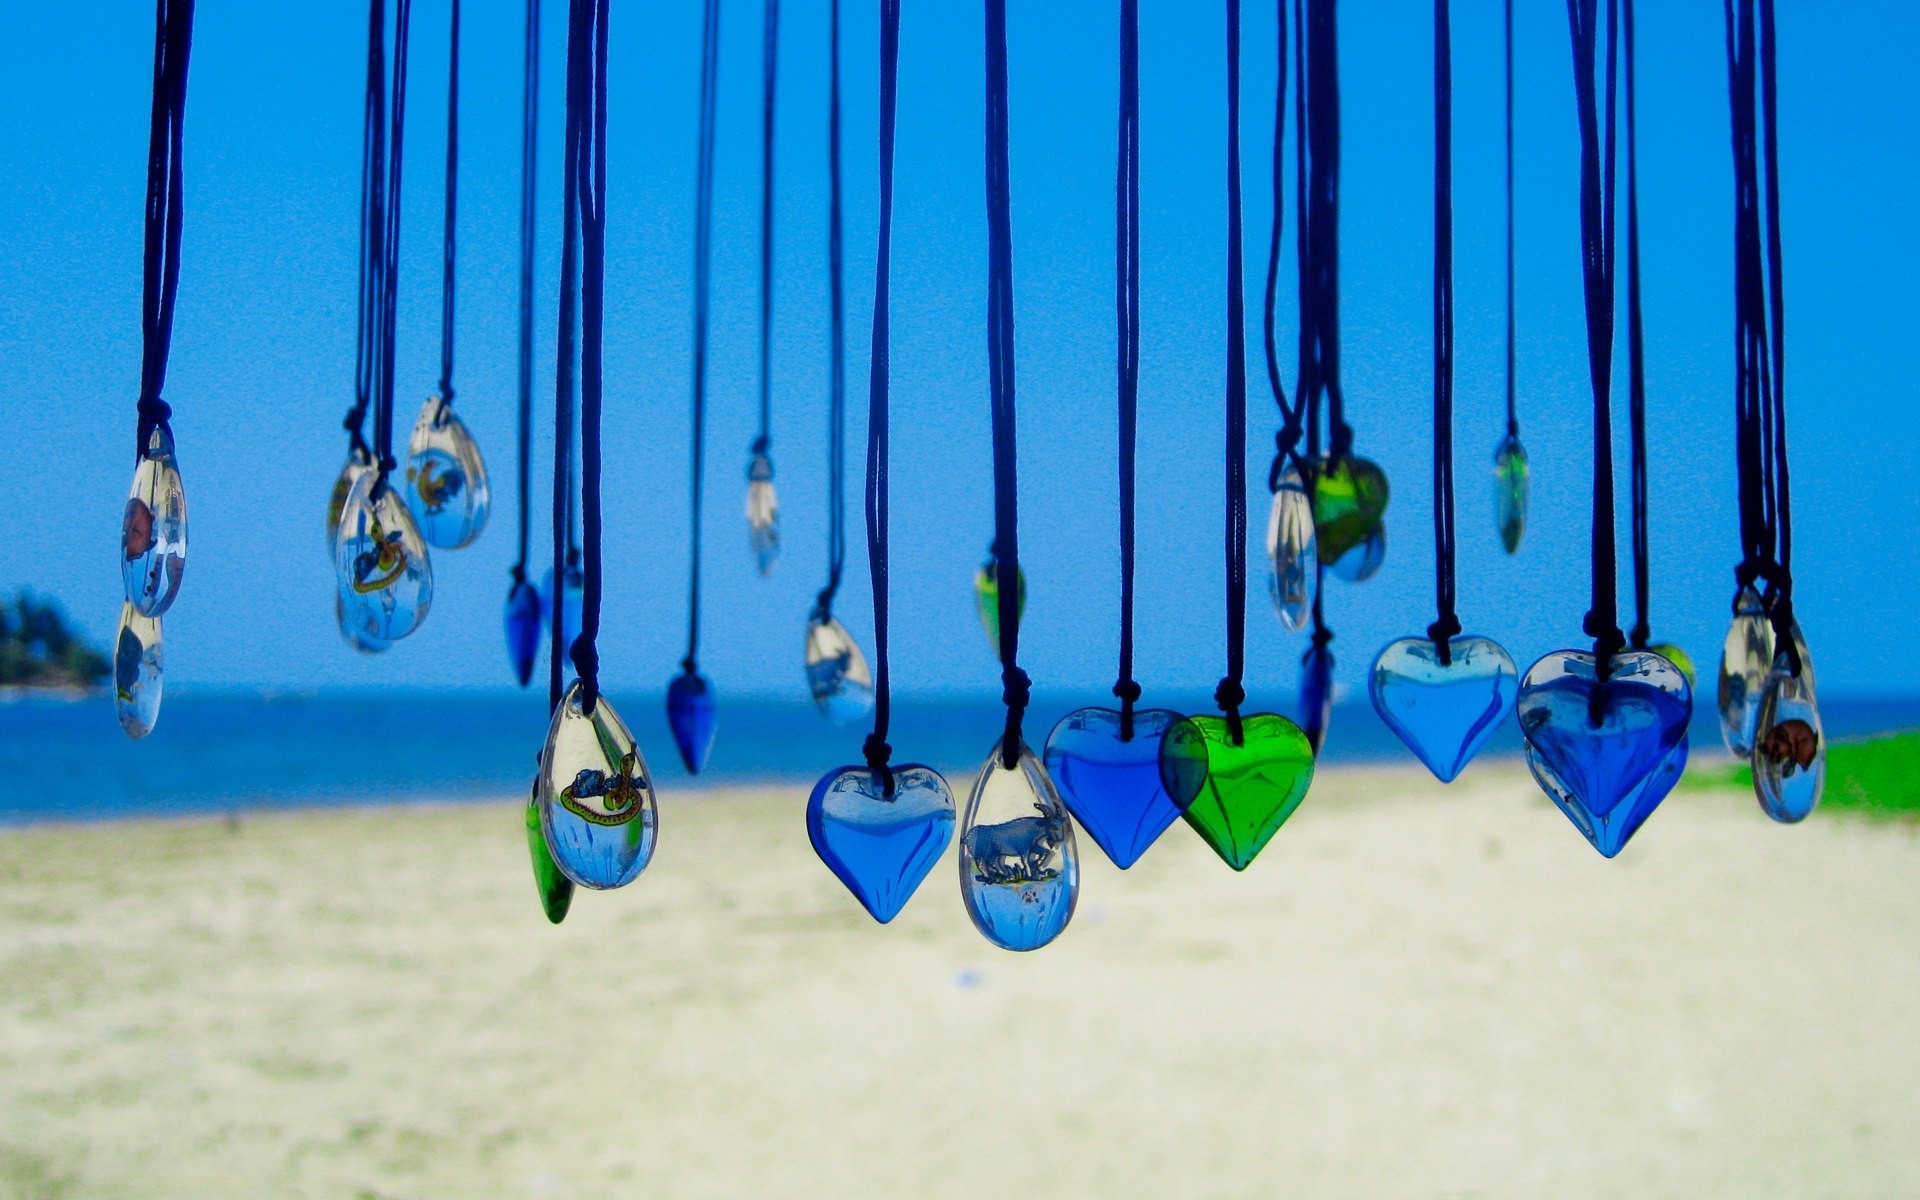 pendant, hearts, beaches - desktop wallpaper